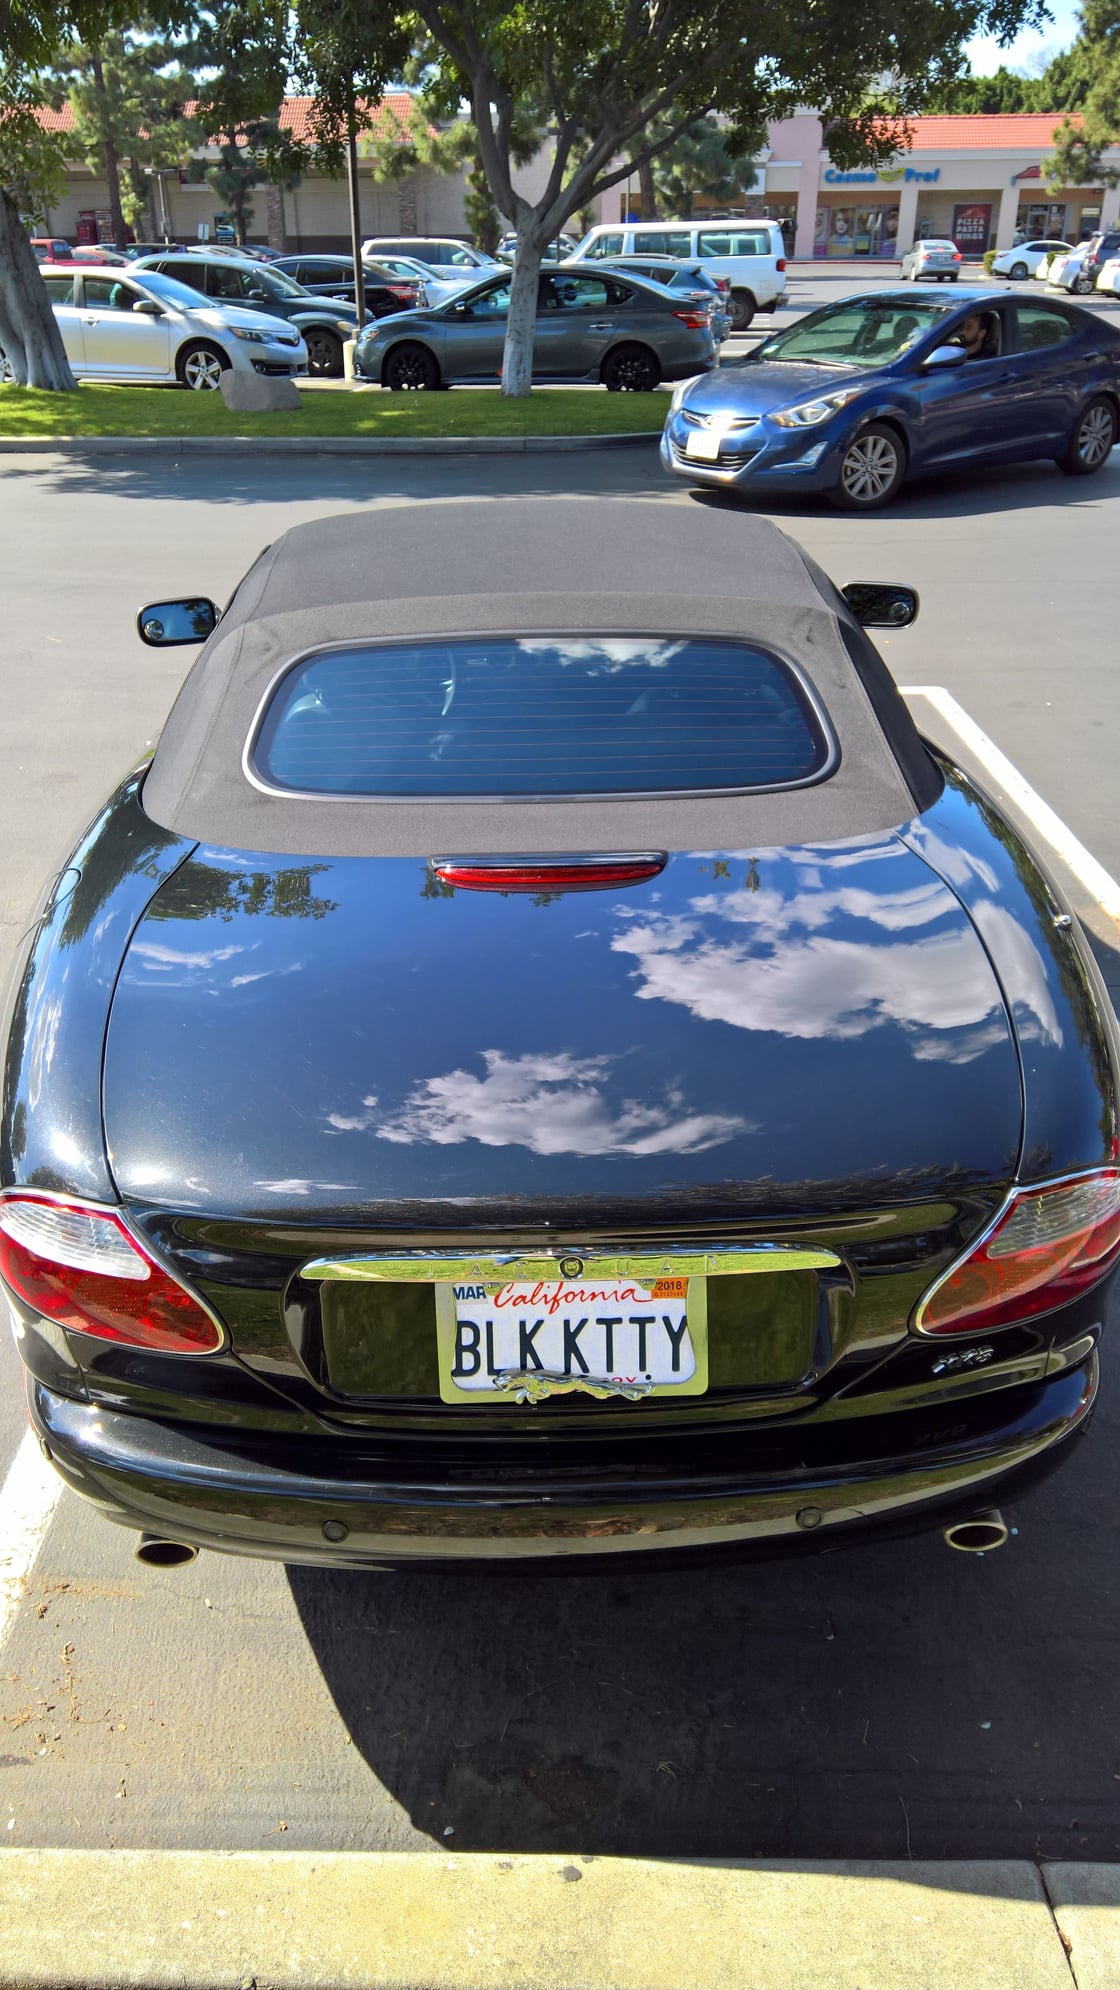 2001 Jaguar XK8 - Very low mileage triple black XK8 - Used - VIN SAJDA42C21NA17145 - 65,600 Miles - 8 cyl - 2WD - Automatic - Convertible - Black - Culver City, Ca, CA 90230, United States